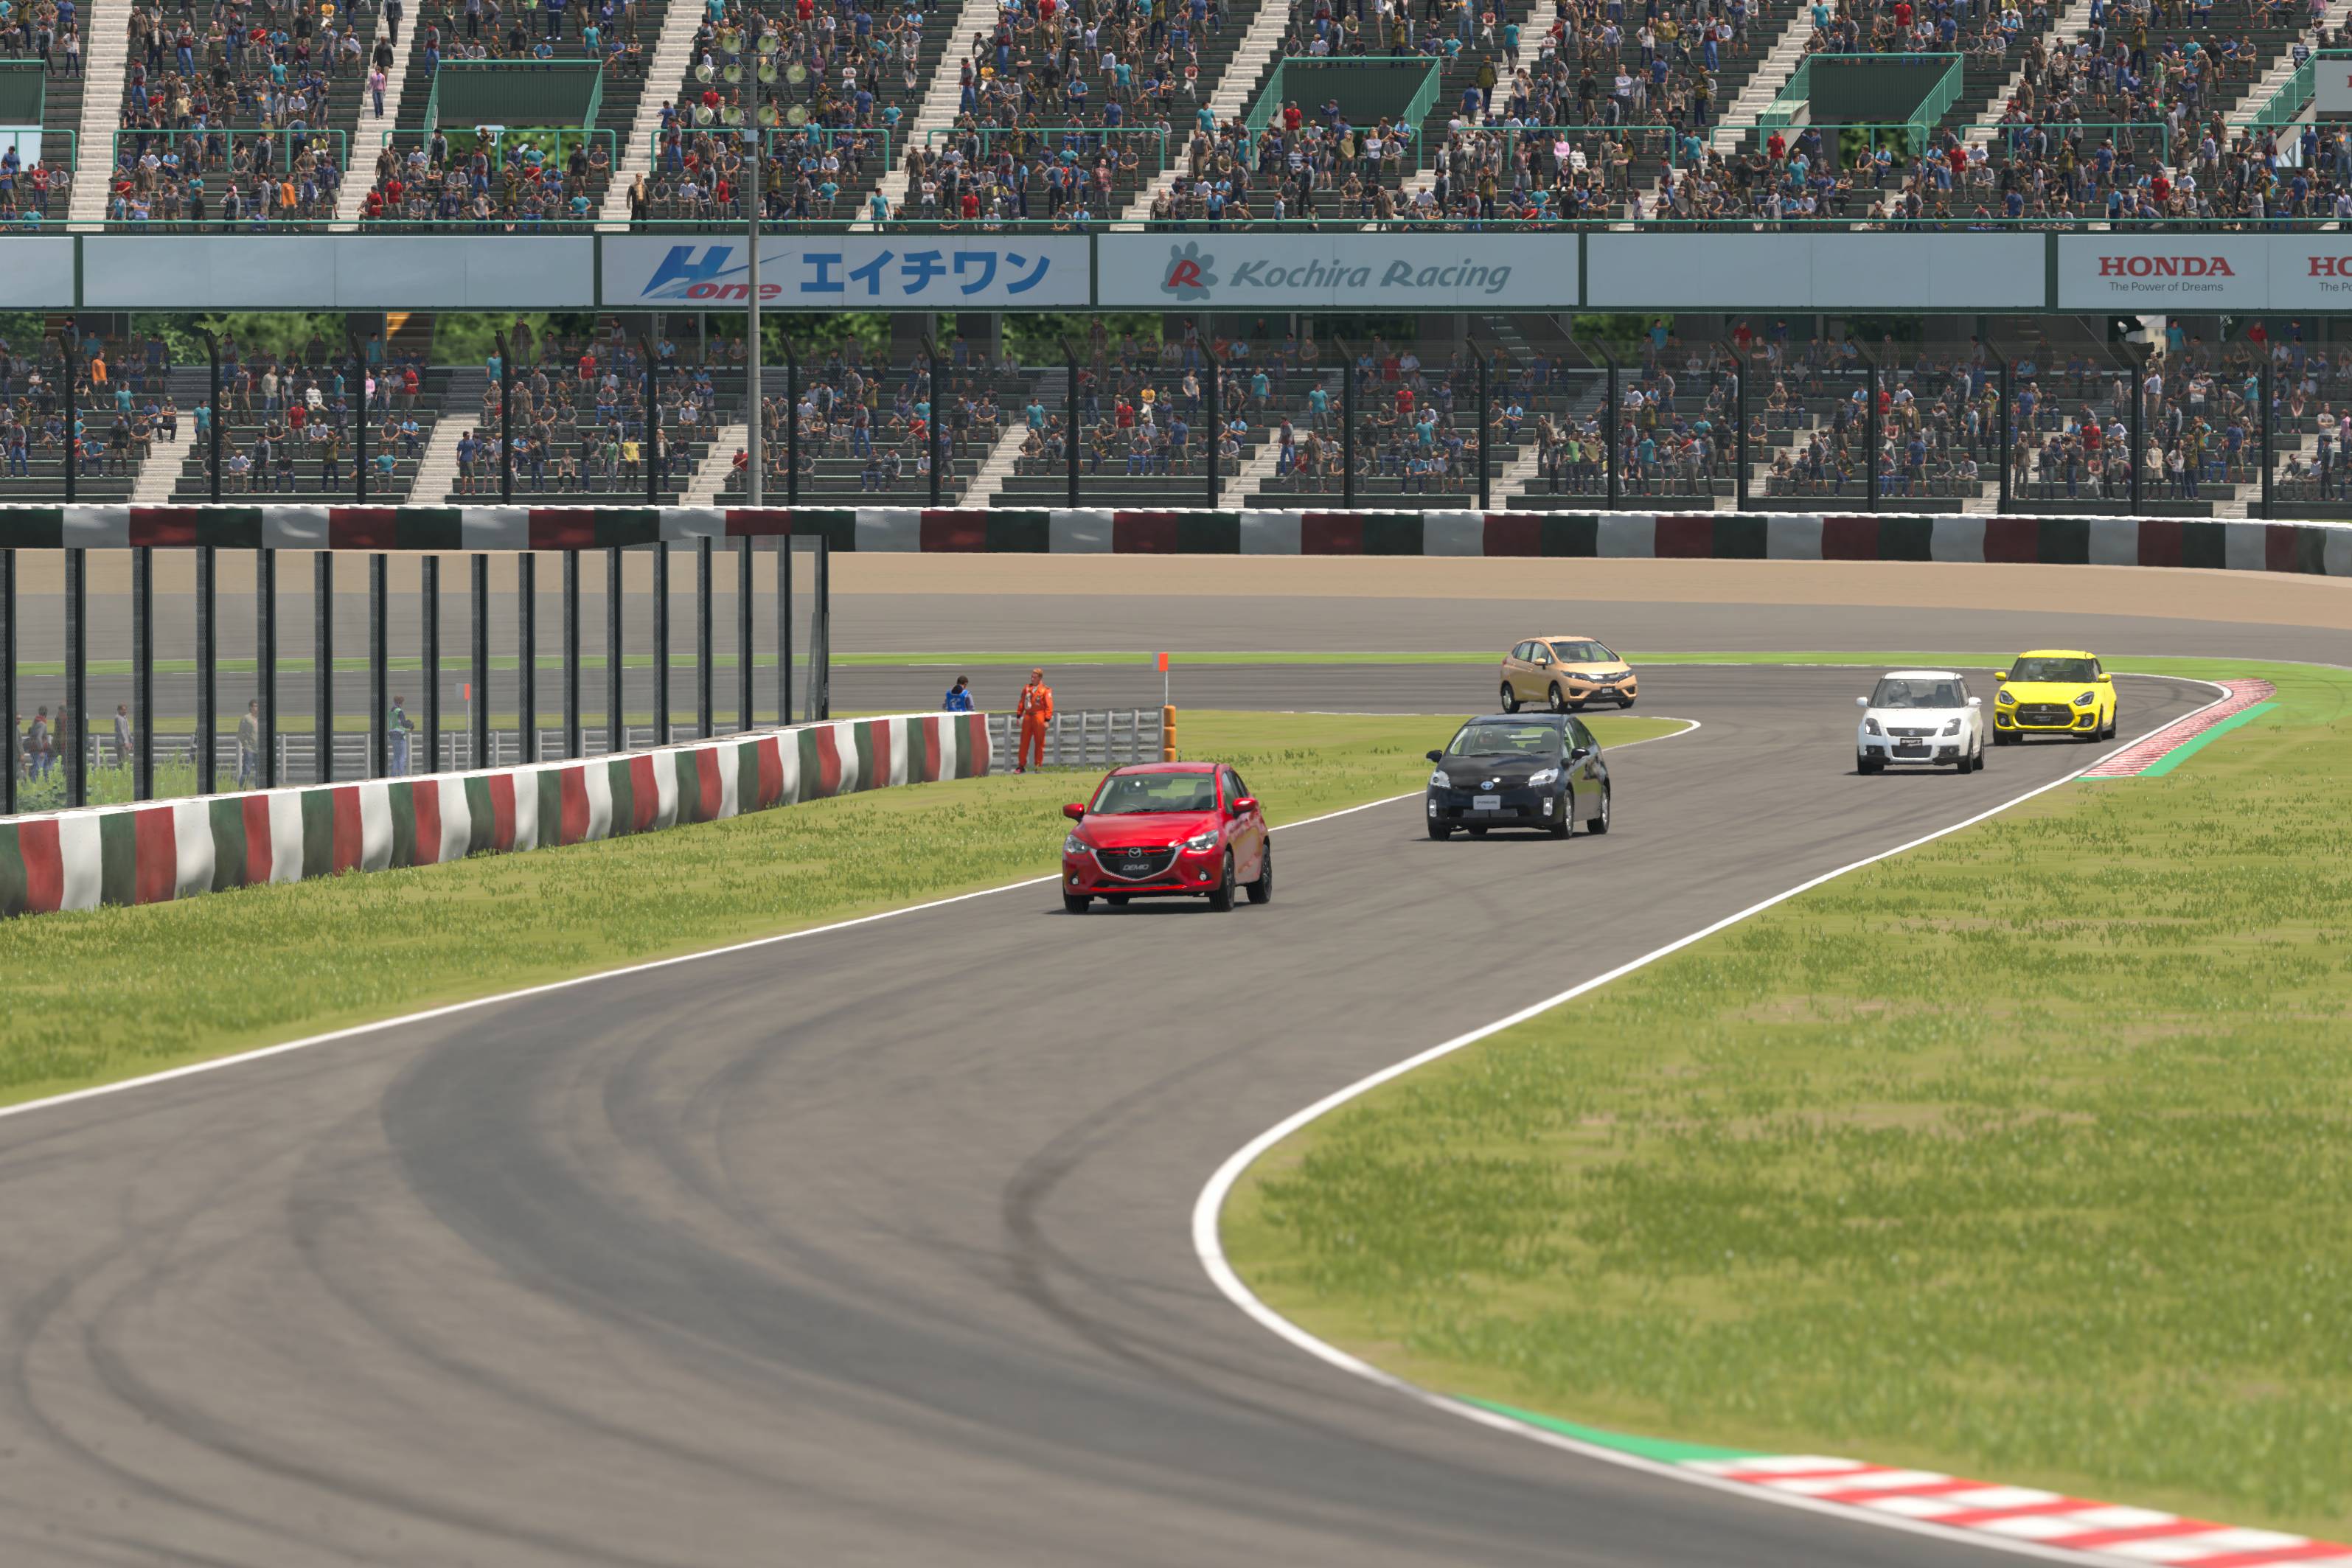 Gran Turismo 7 review: the updated verdict